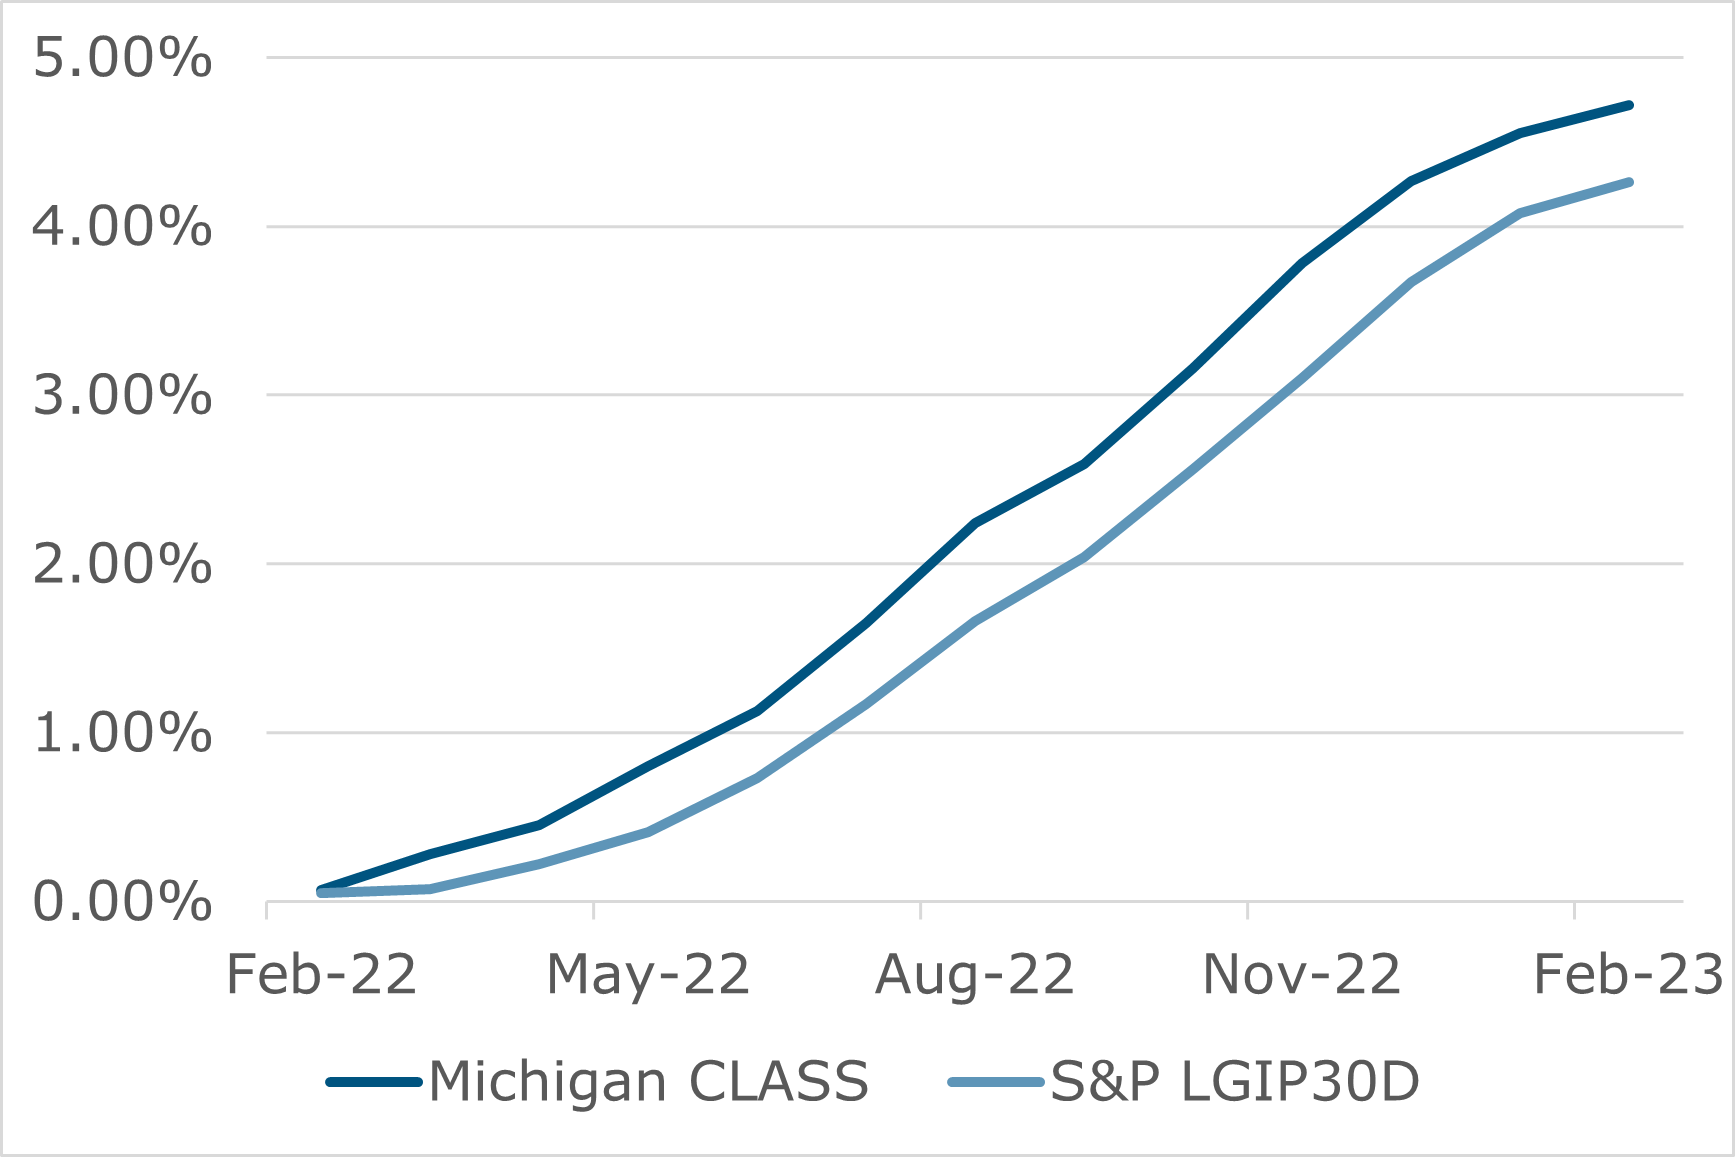 02.23 - Michigan CLASS Performance